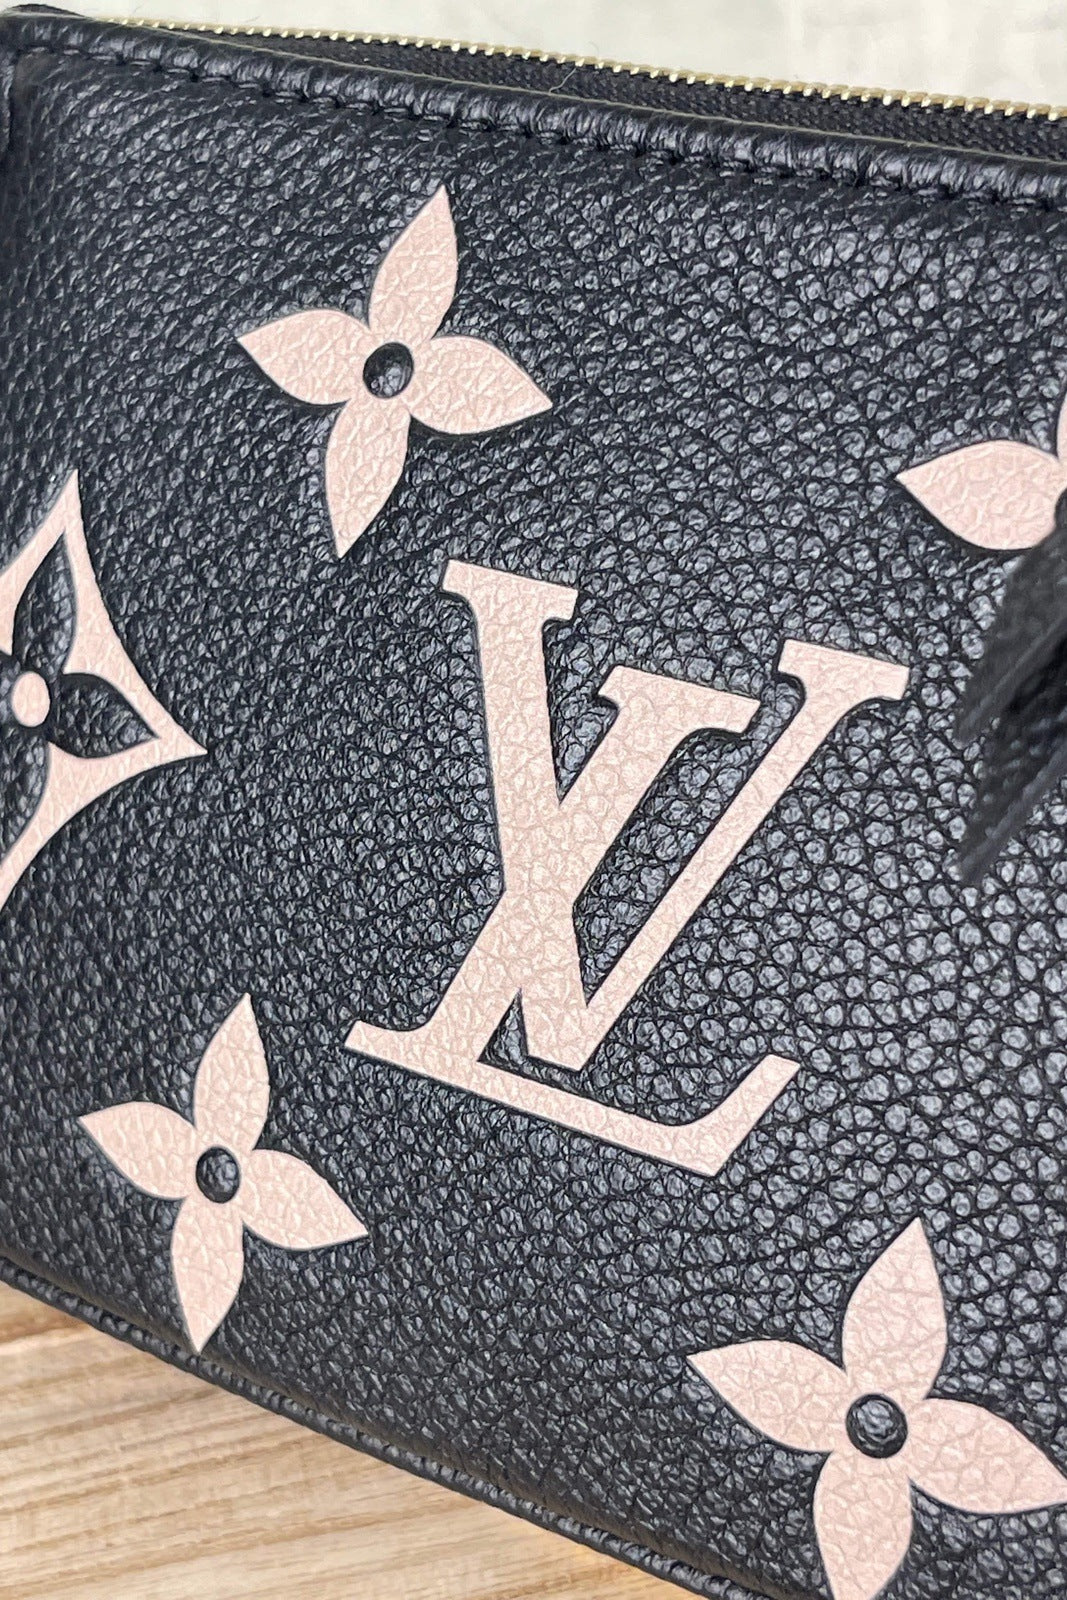 Louis Vuitton Empreinte Monogram Giant Mini Pochette Accessories